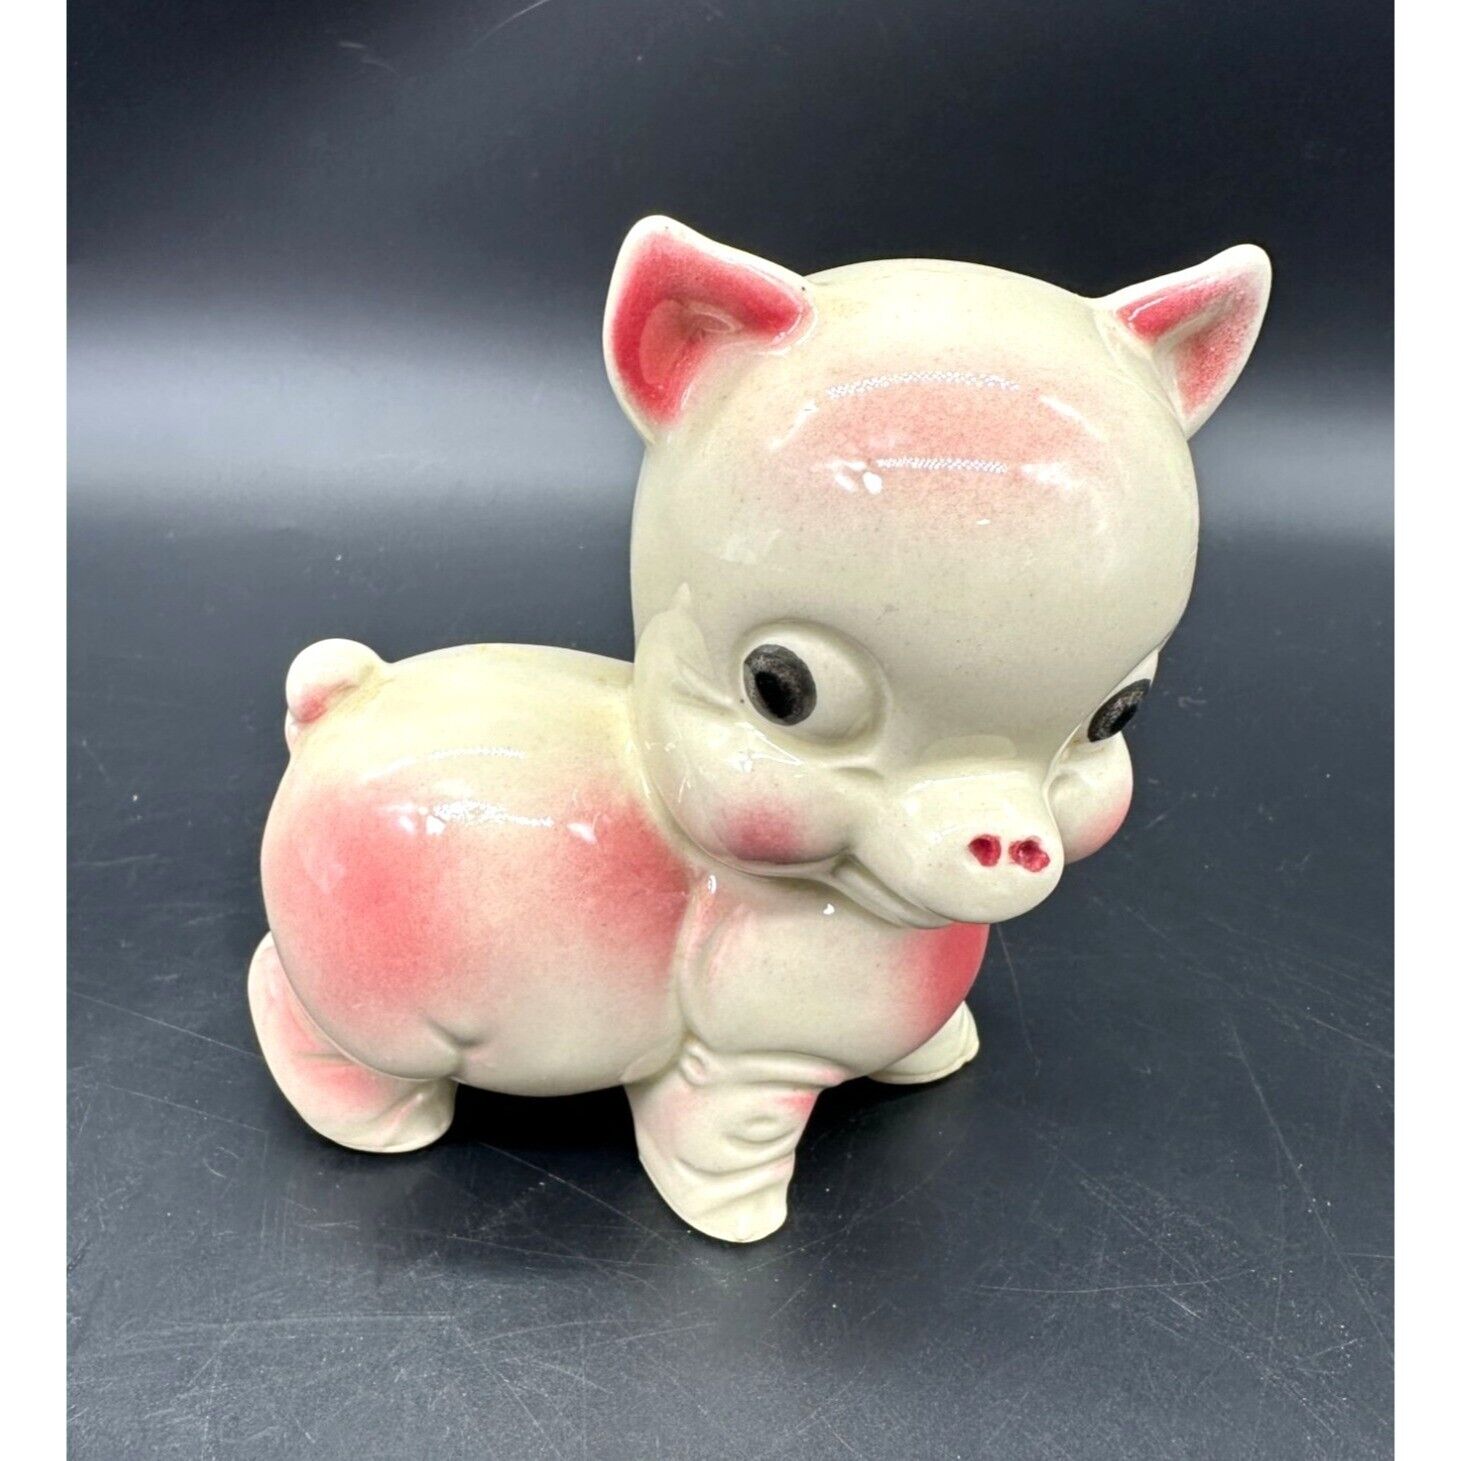 Pig Ceramic Vintage Made in Japan Collection Gift Pink